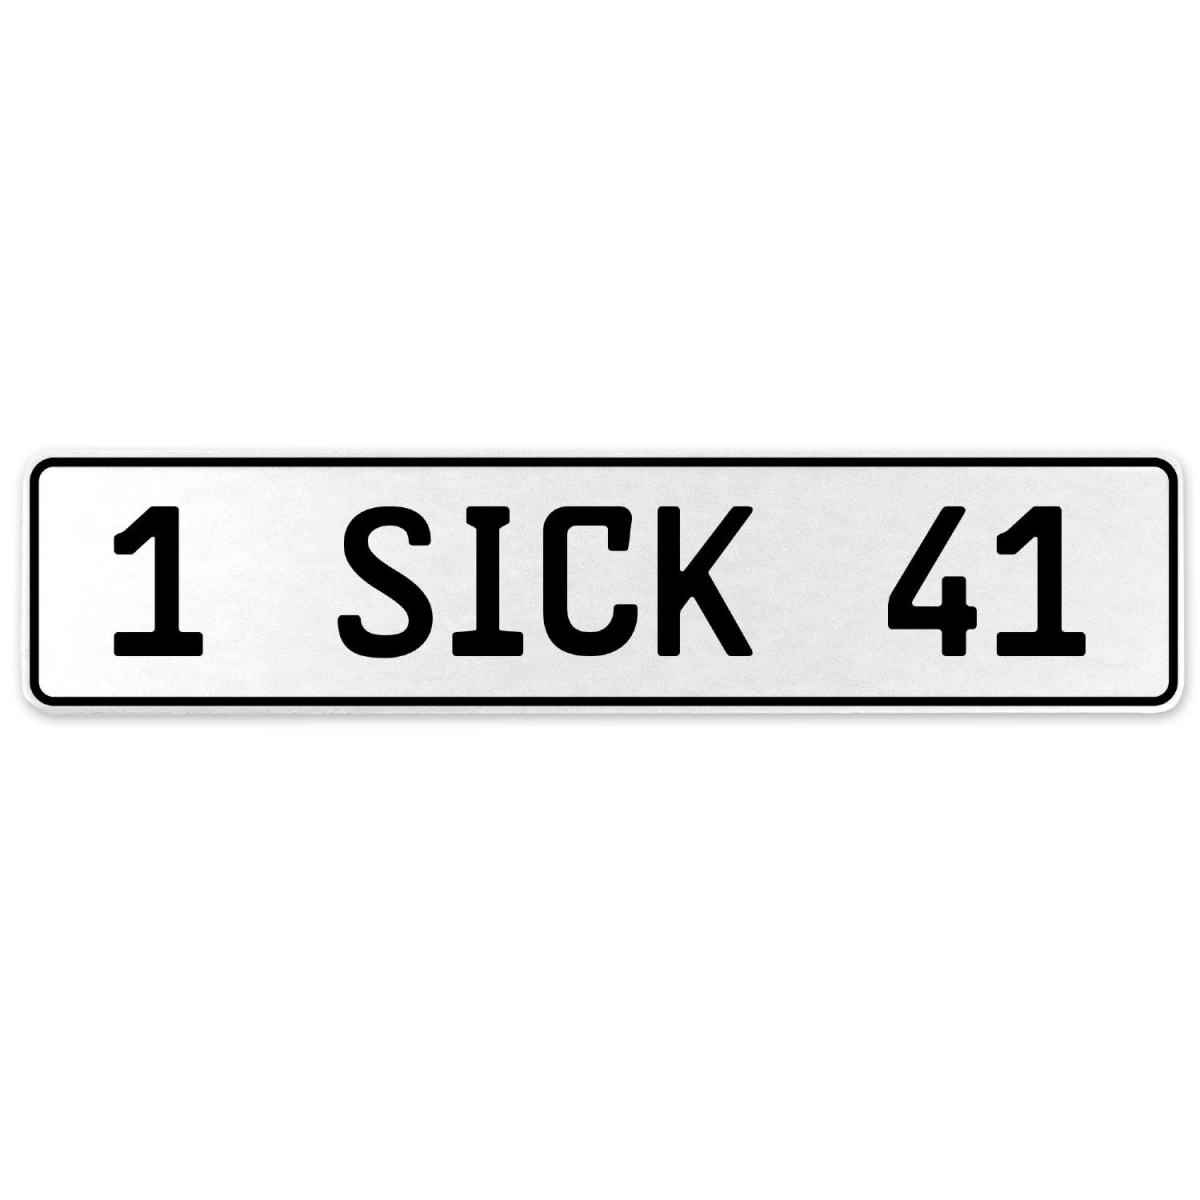 554440 1 Sick 41 - White Aluminum Street Sign Mancave Euro Plate Name Door Sign Wall